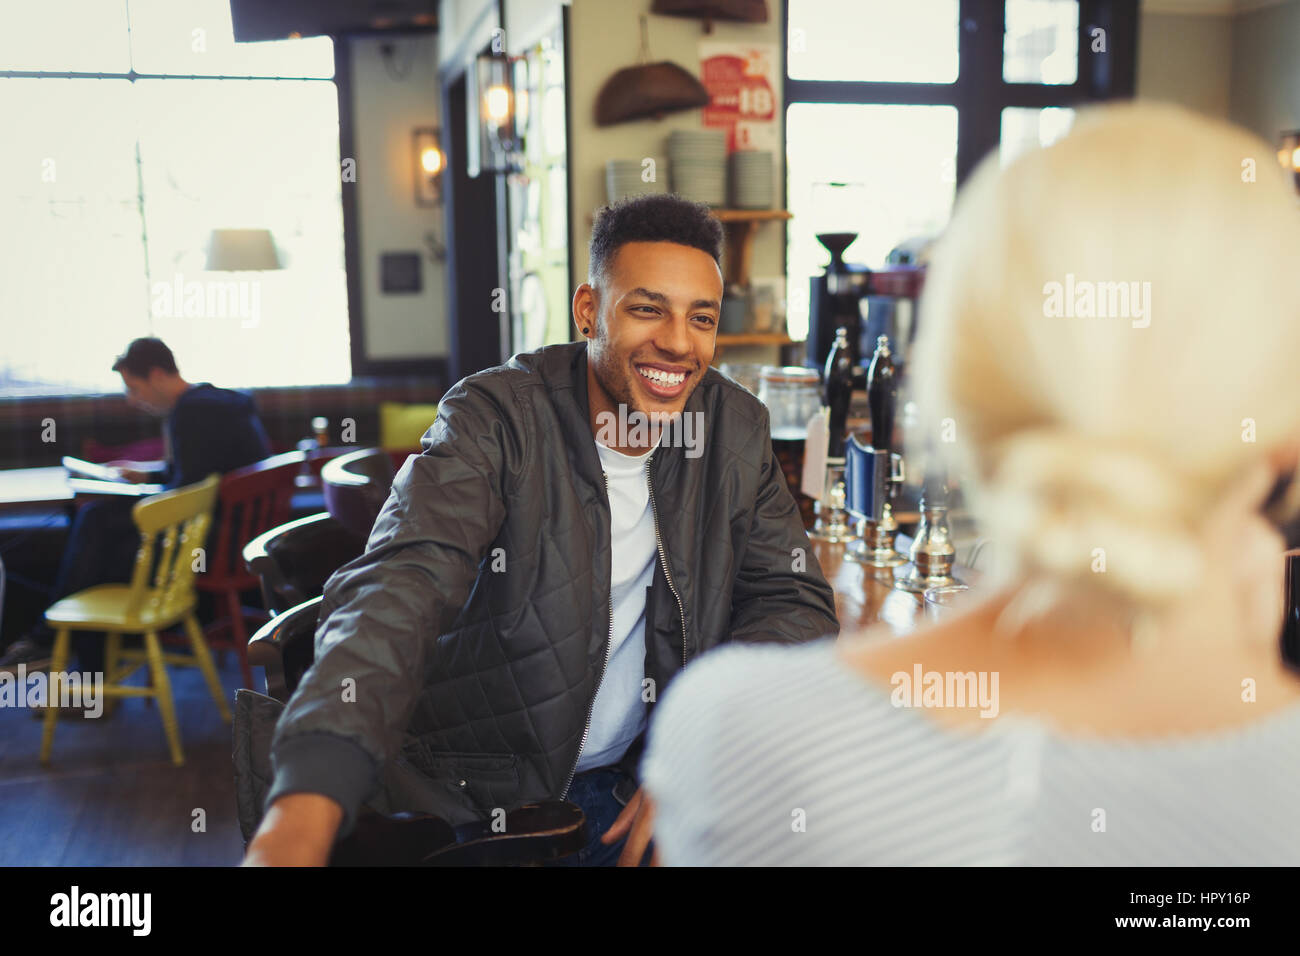 Smiling man talking to woman in bar Stock Photo